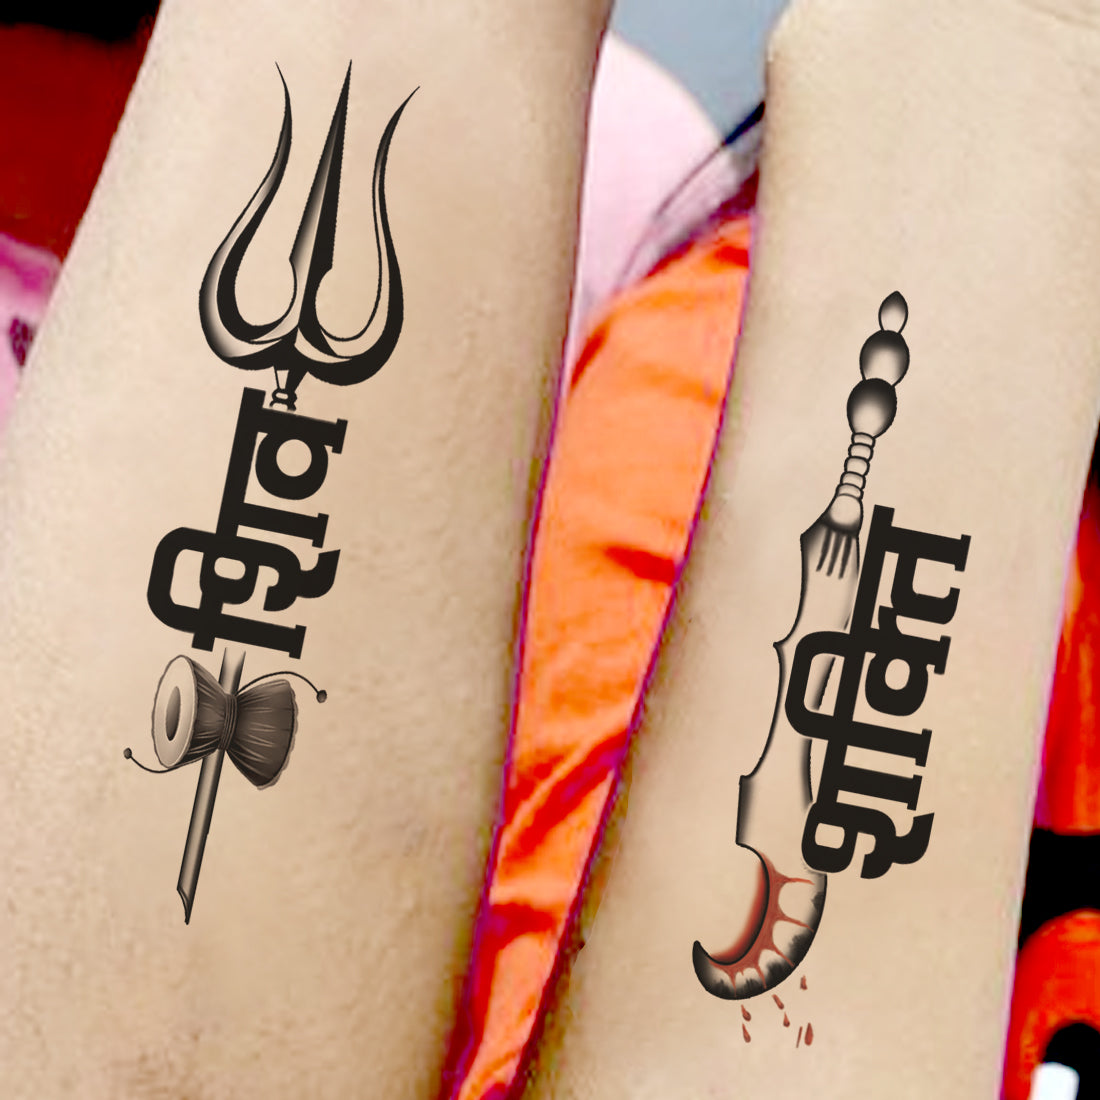 Shiva tattoo | Hand tattoos for guys, Shiva tattoo, Cute tattoos on wrist